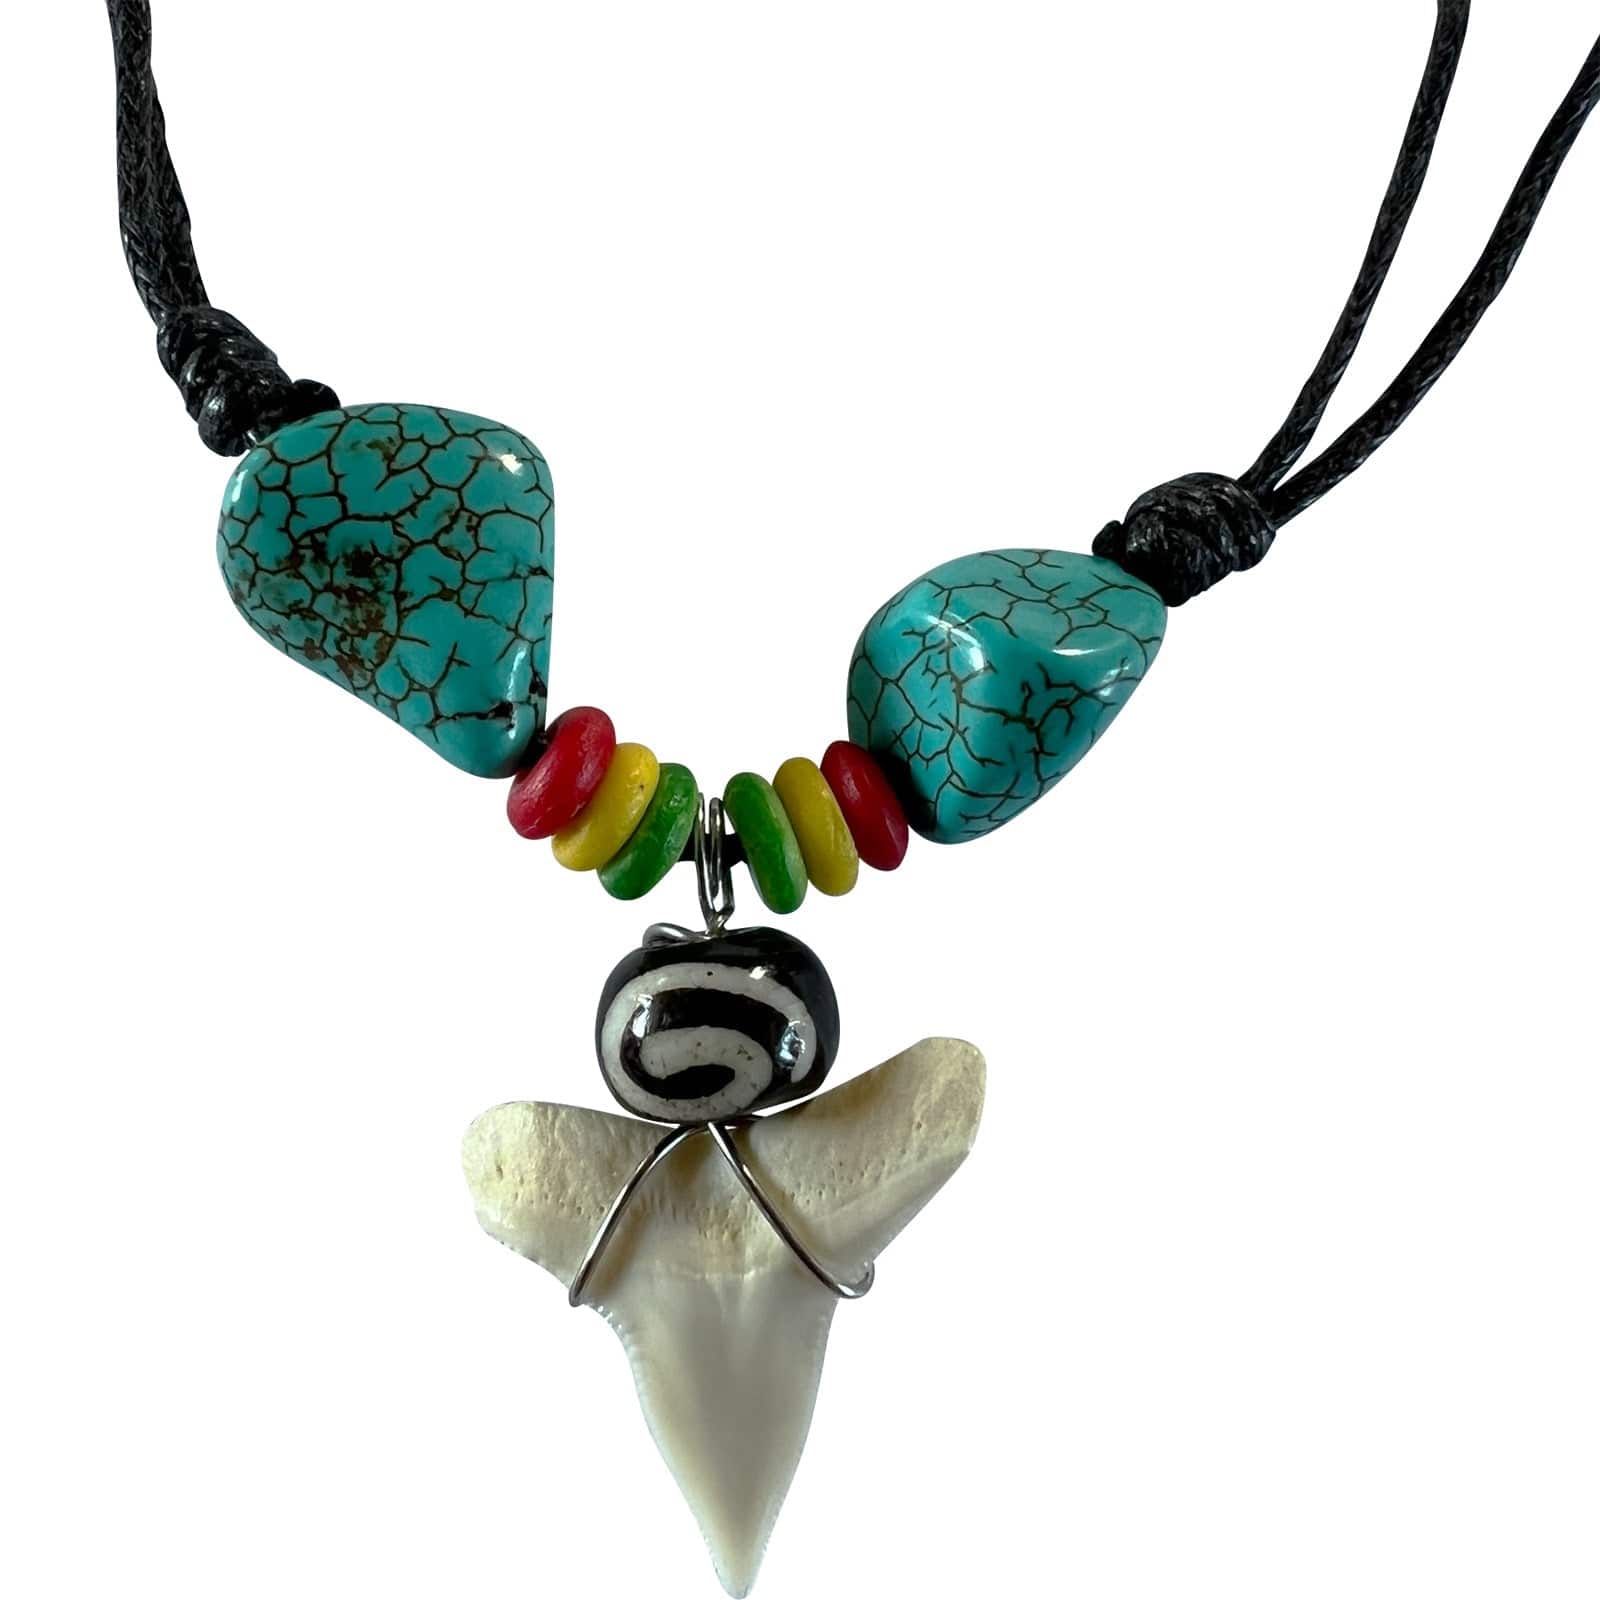 Imitation Resin Shark Tooth Pendant Necklace Cord Chain Rasta Reggae Turquoise Beads Jewellery